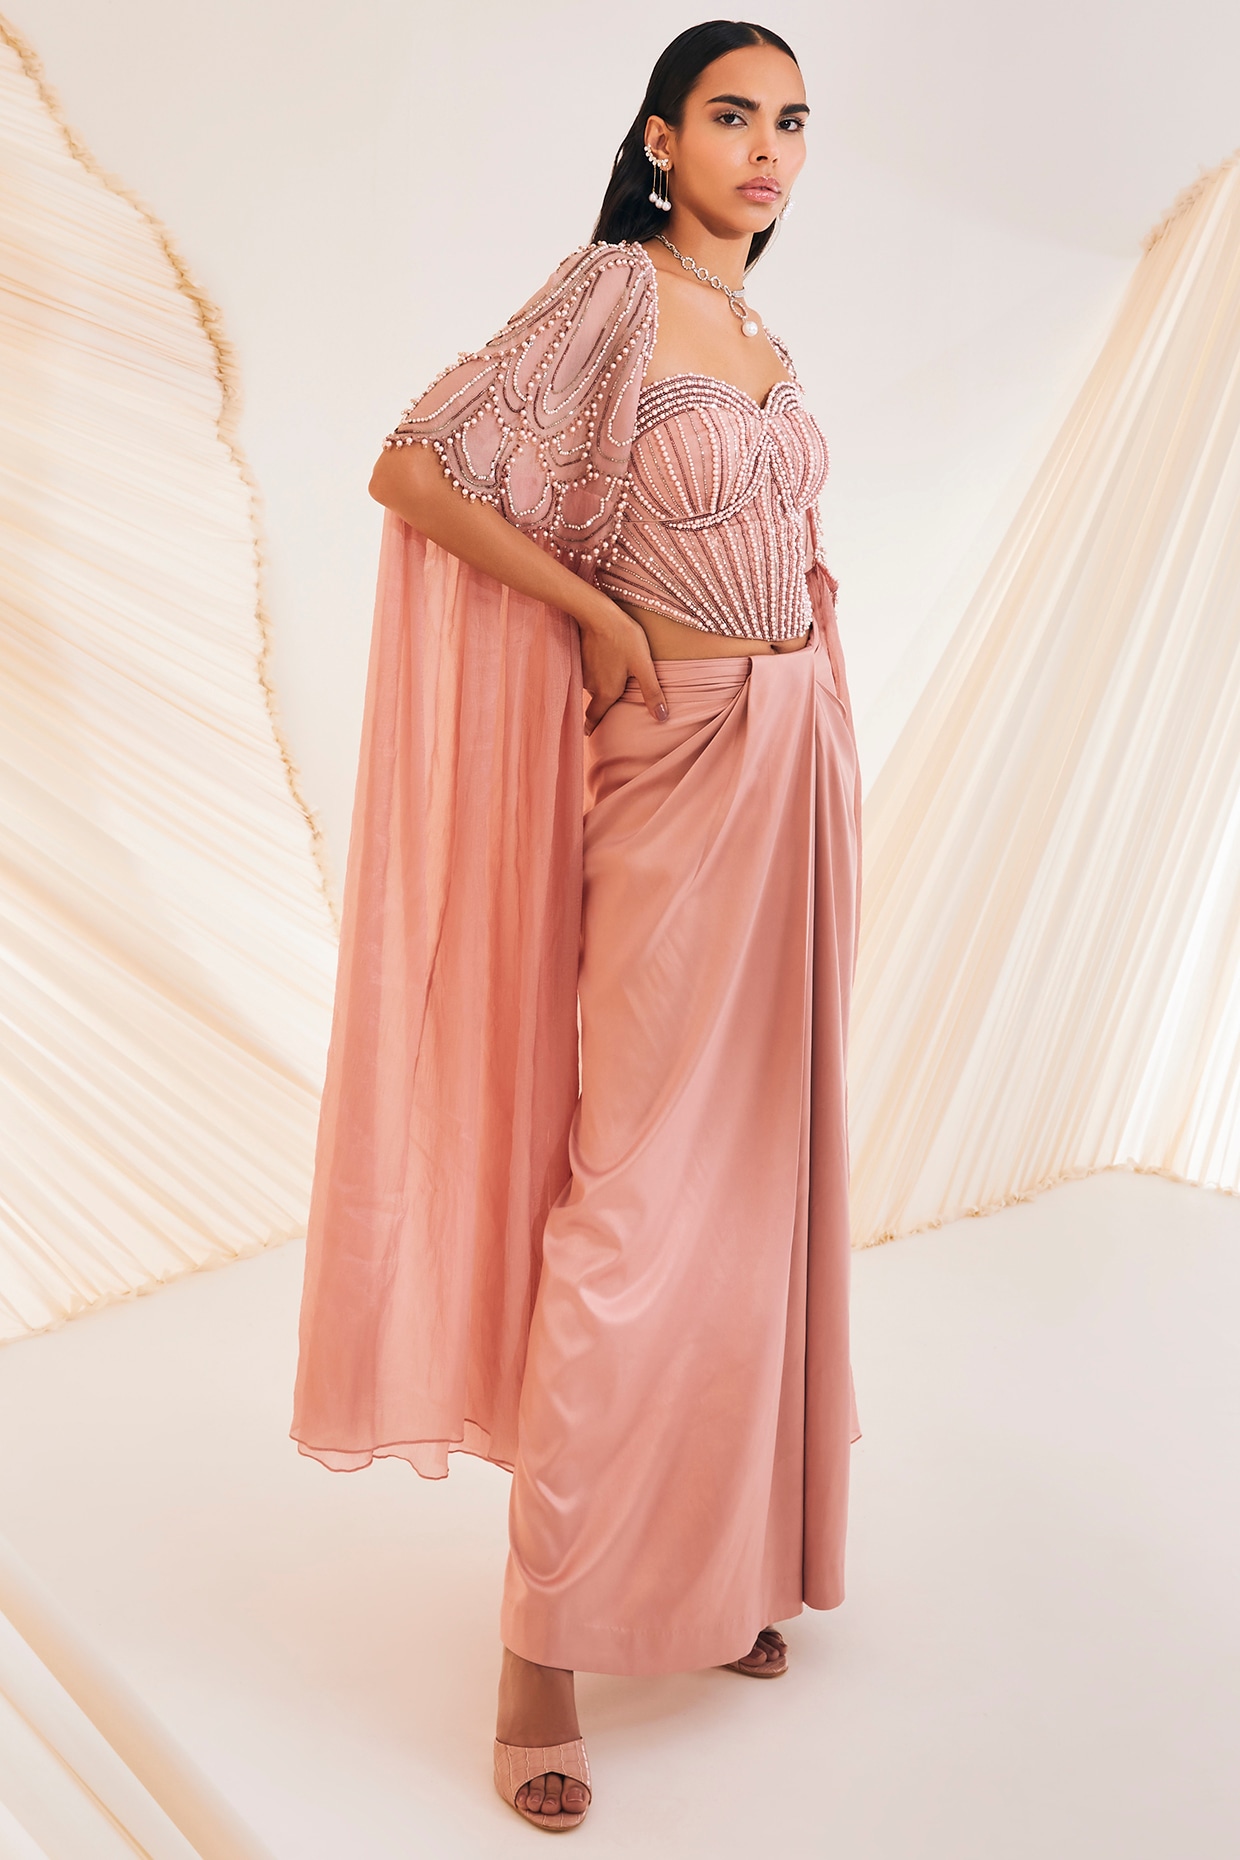 Rose Pink Anarkali Gown With Cape | Pink anarkali, Pink anarkali gown,  Fashion sketches dresses